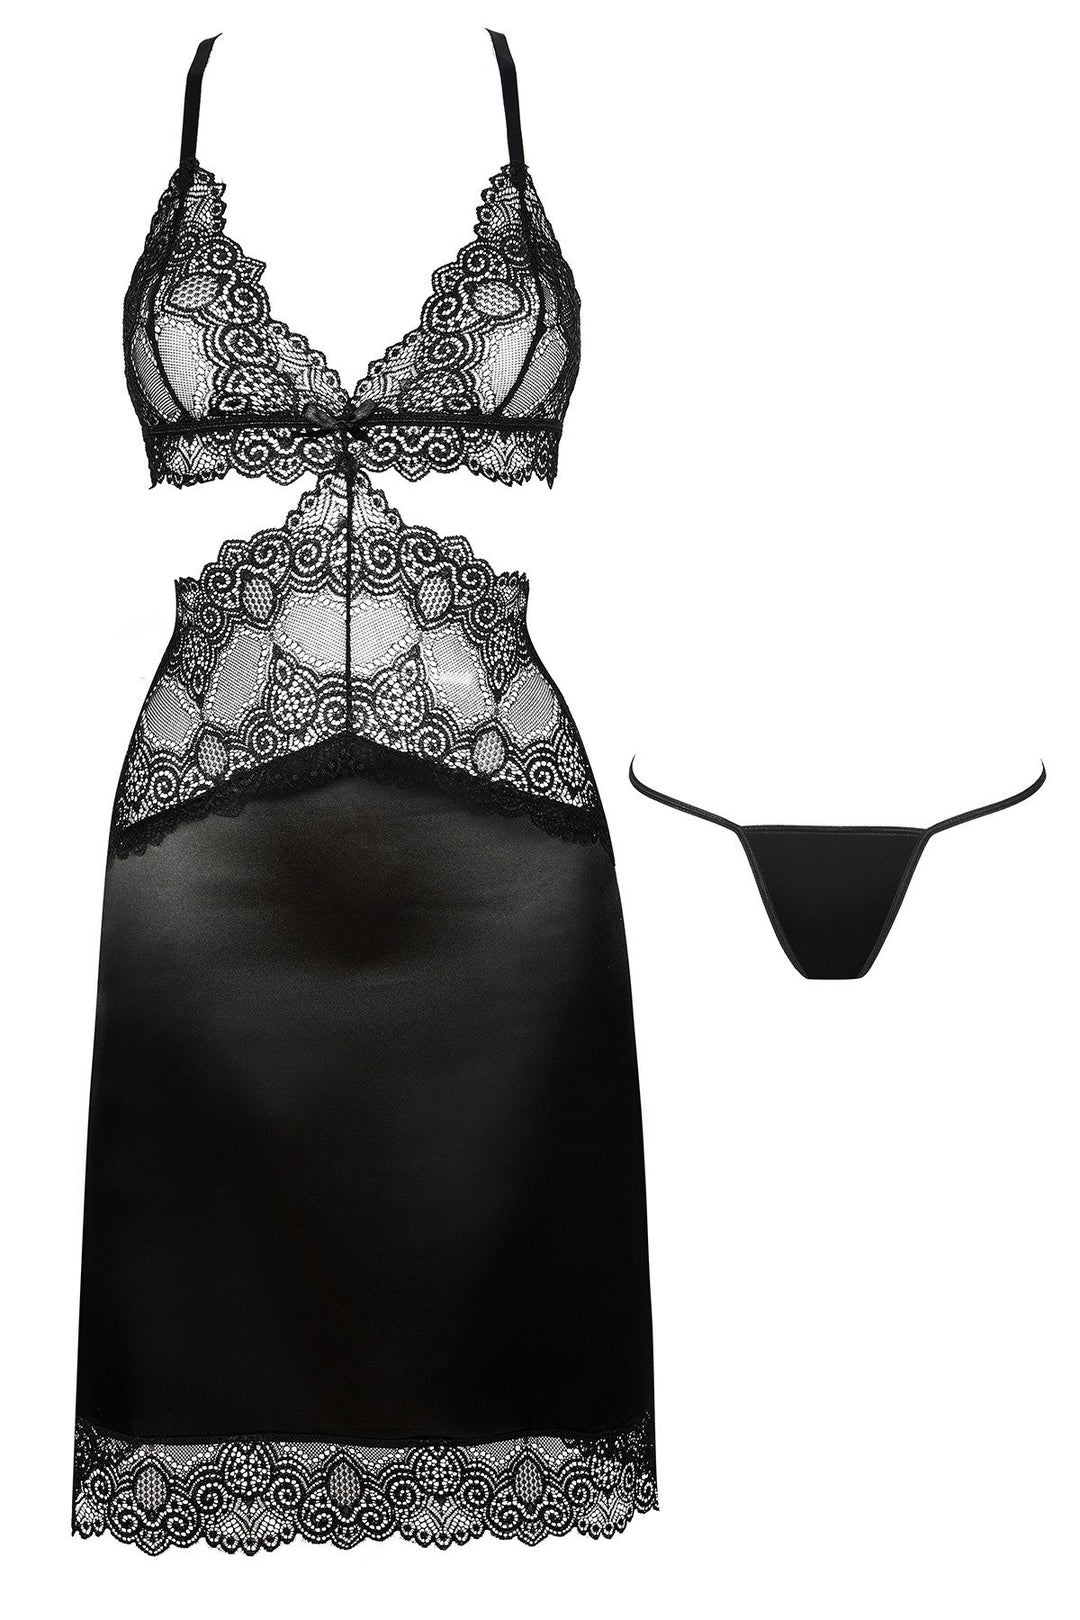 Black Satin & Lace Chemise Sleepwear – Lingerie Seduction